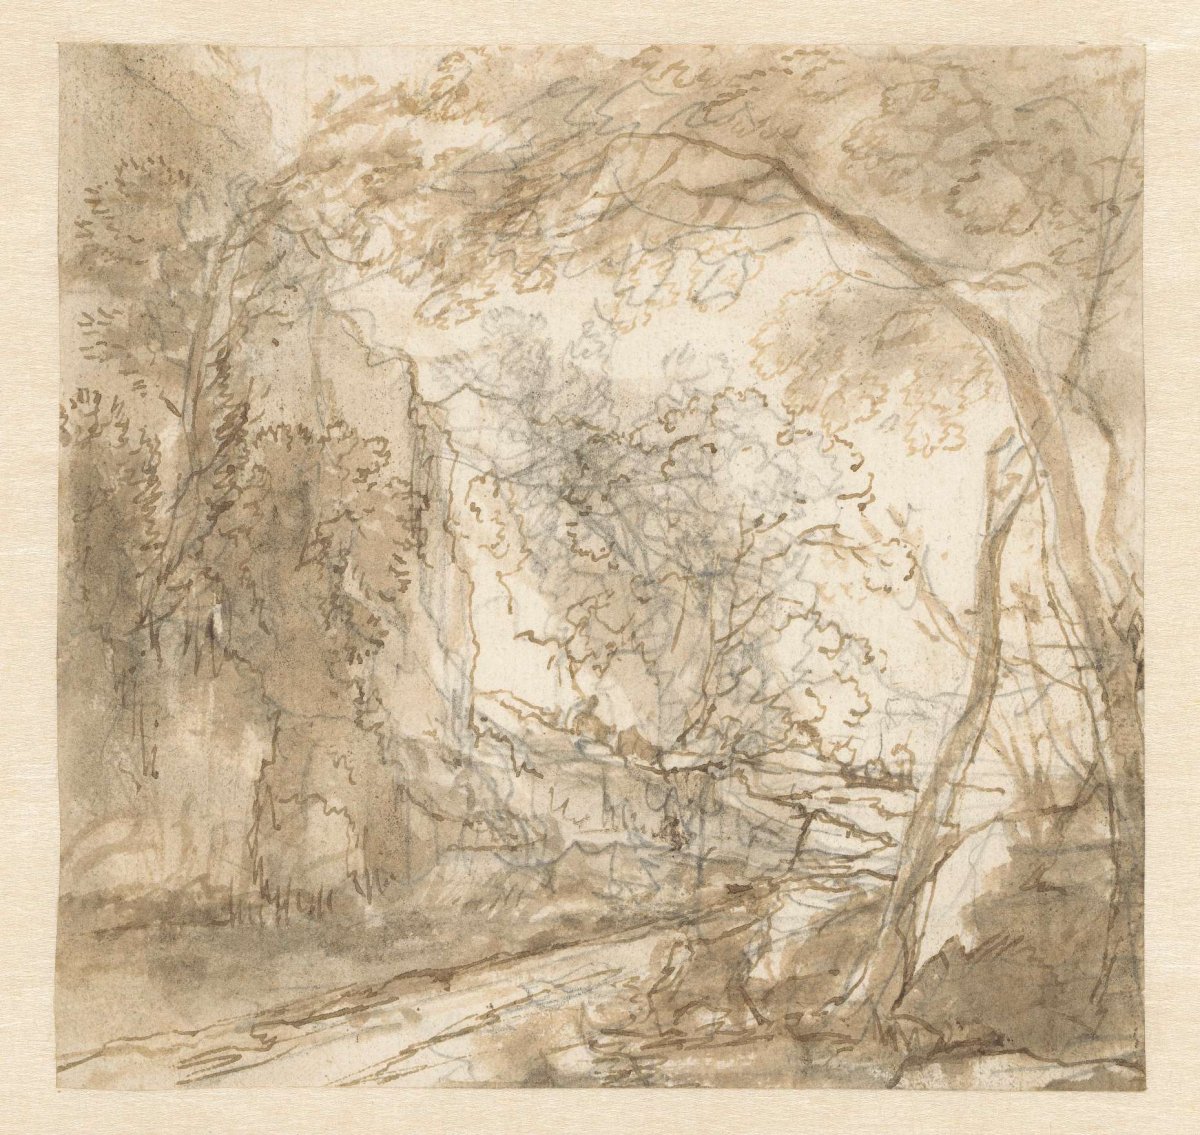 Landscape with road between trees, Herman van Swanevelt, c. 1610 - before 1655